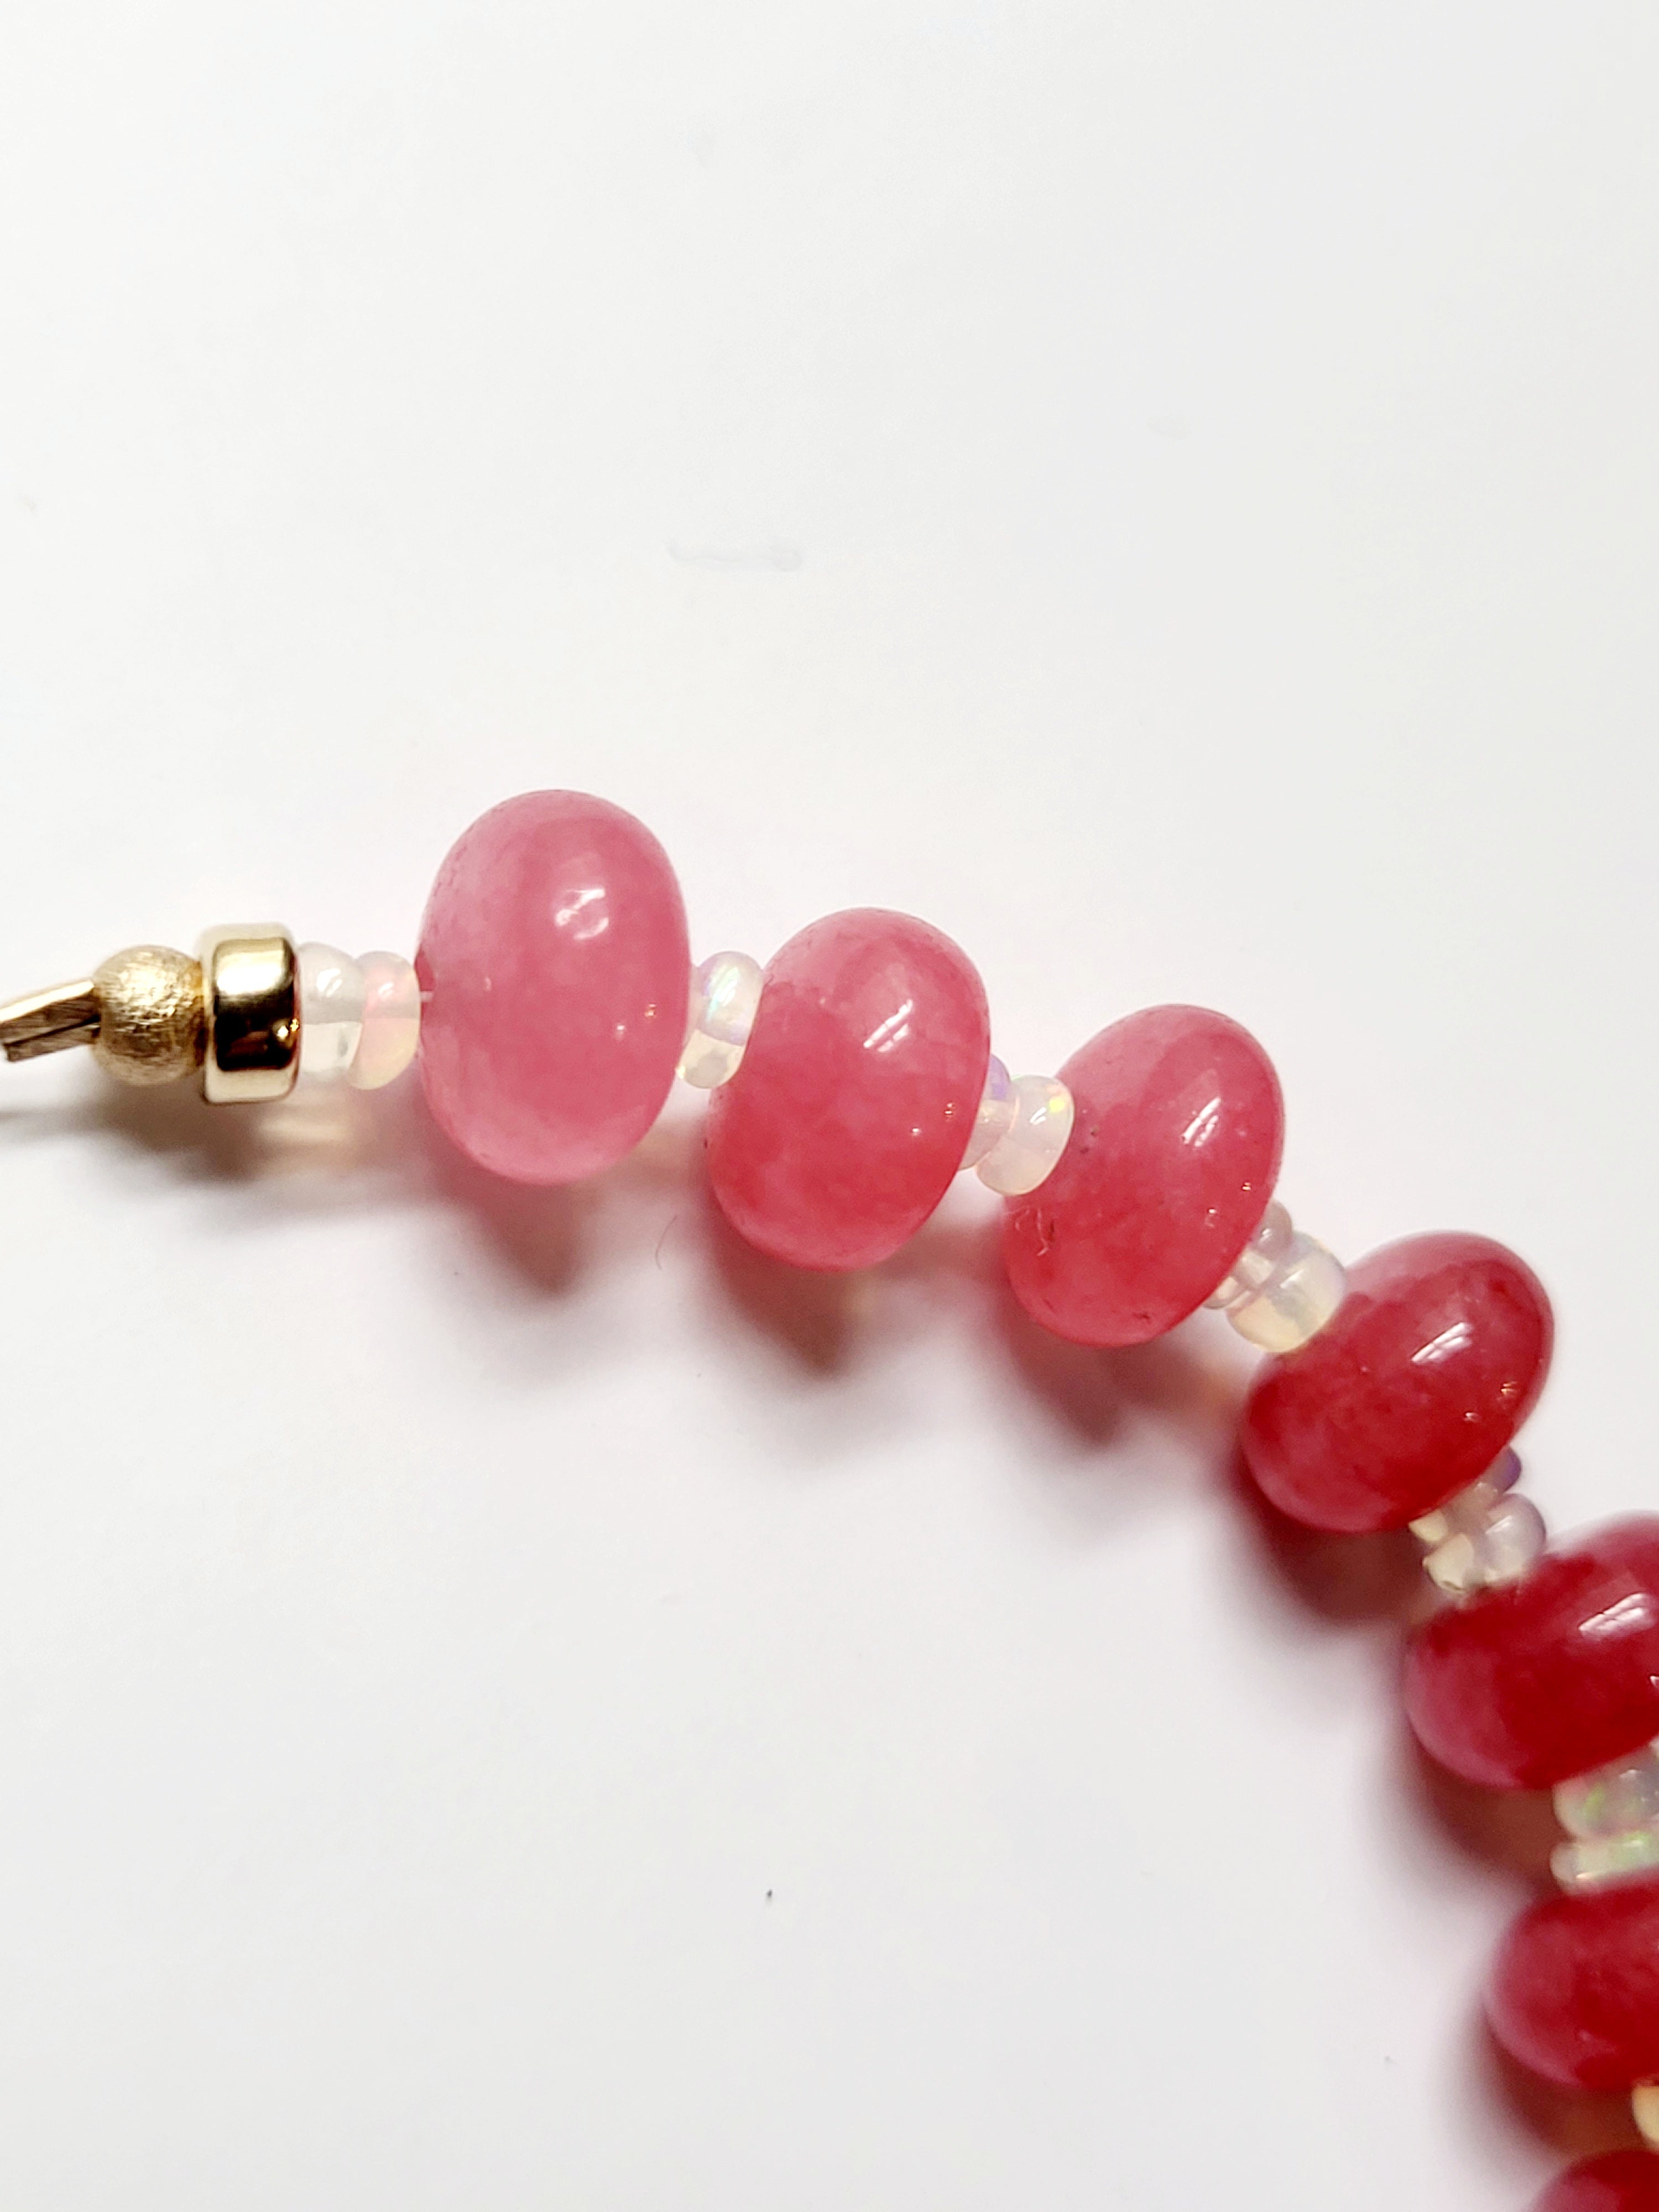 Red Cherry Quartz Necklace